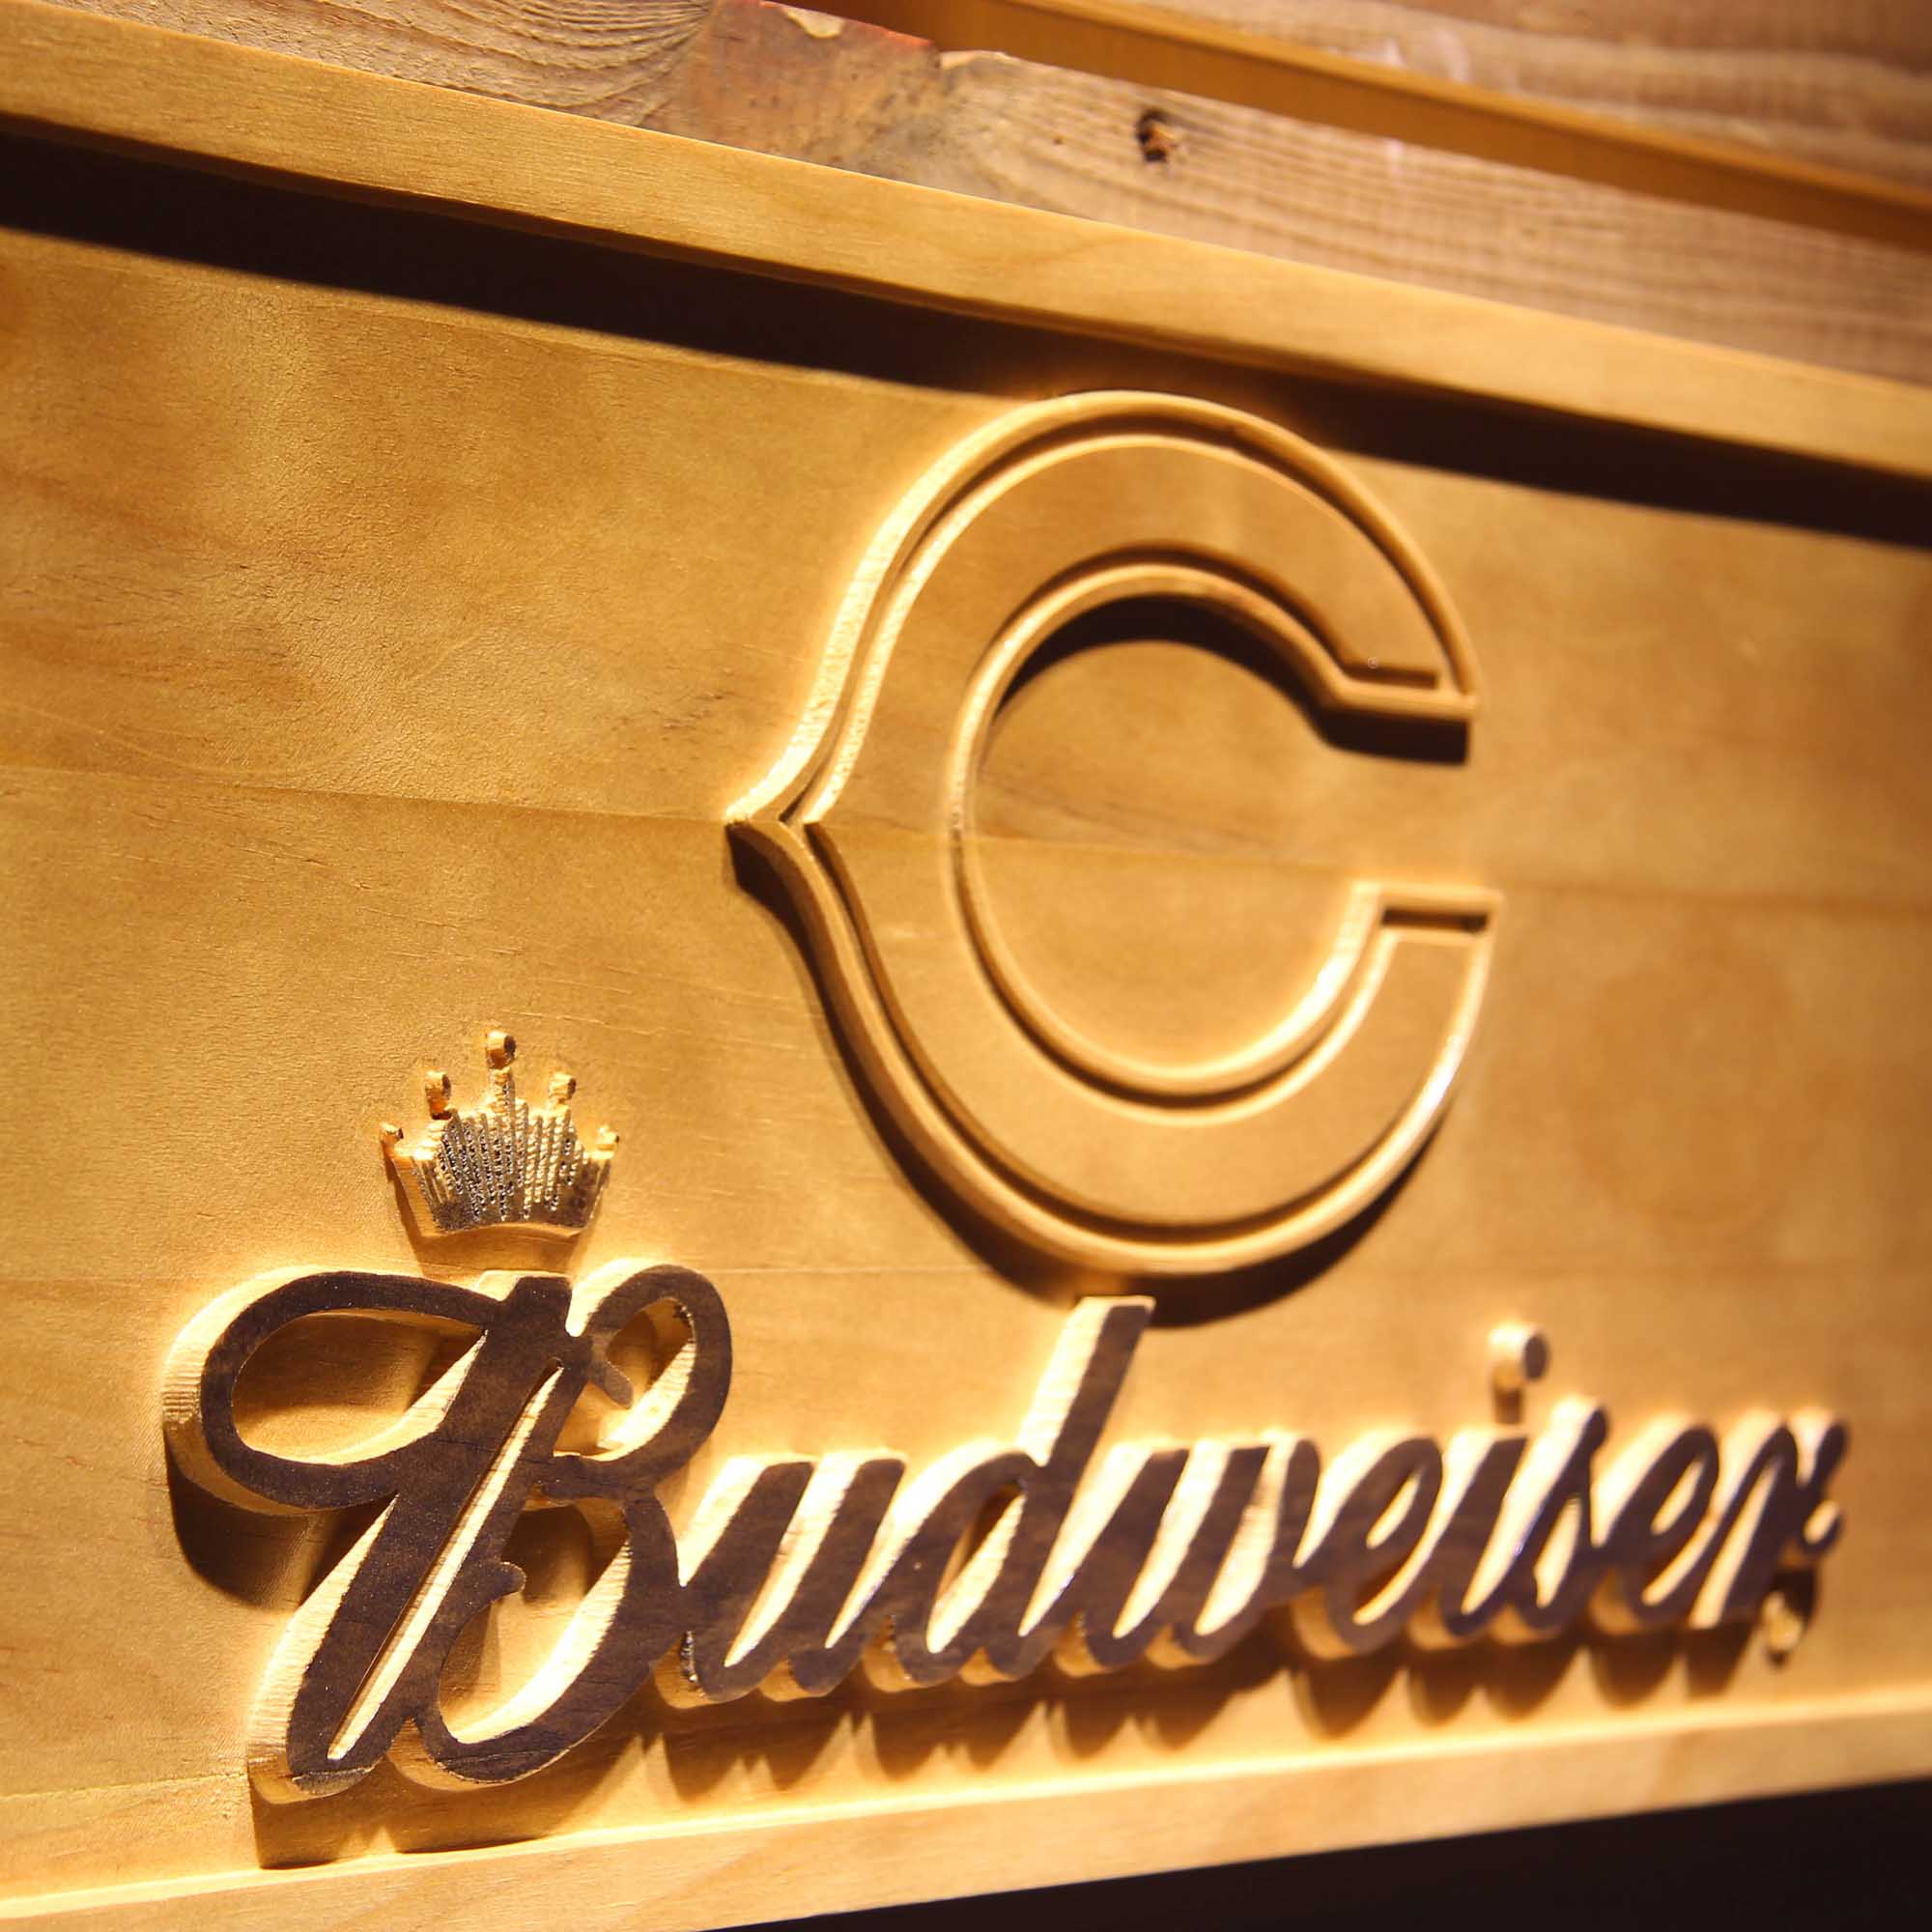 Chicago Bears Budweiser 3D Wooden Engrave Sign